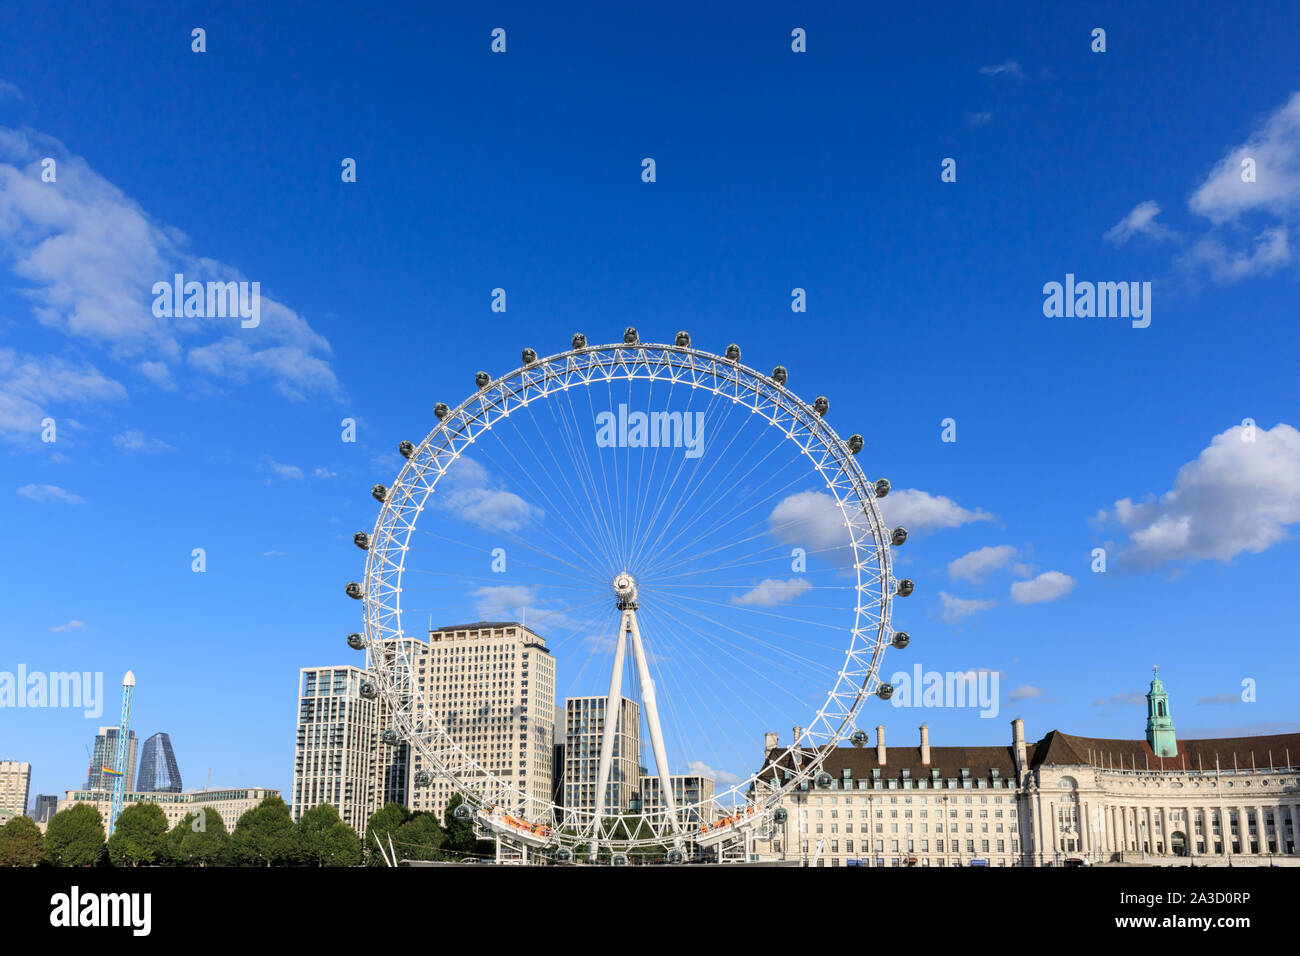 London Eye ruota panoramica Ferris e County Hall, Southbank iconico skyline panorama contro il cielo blu, London, Regno Unito Foto Stock